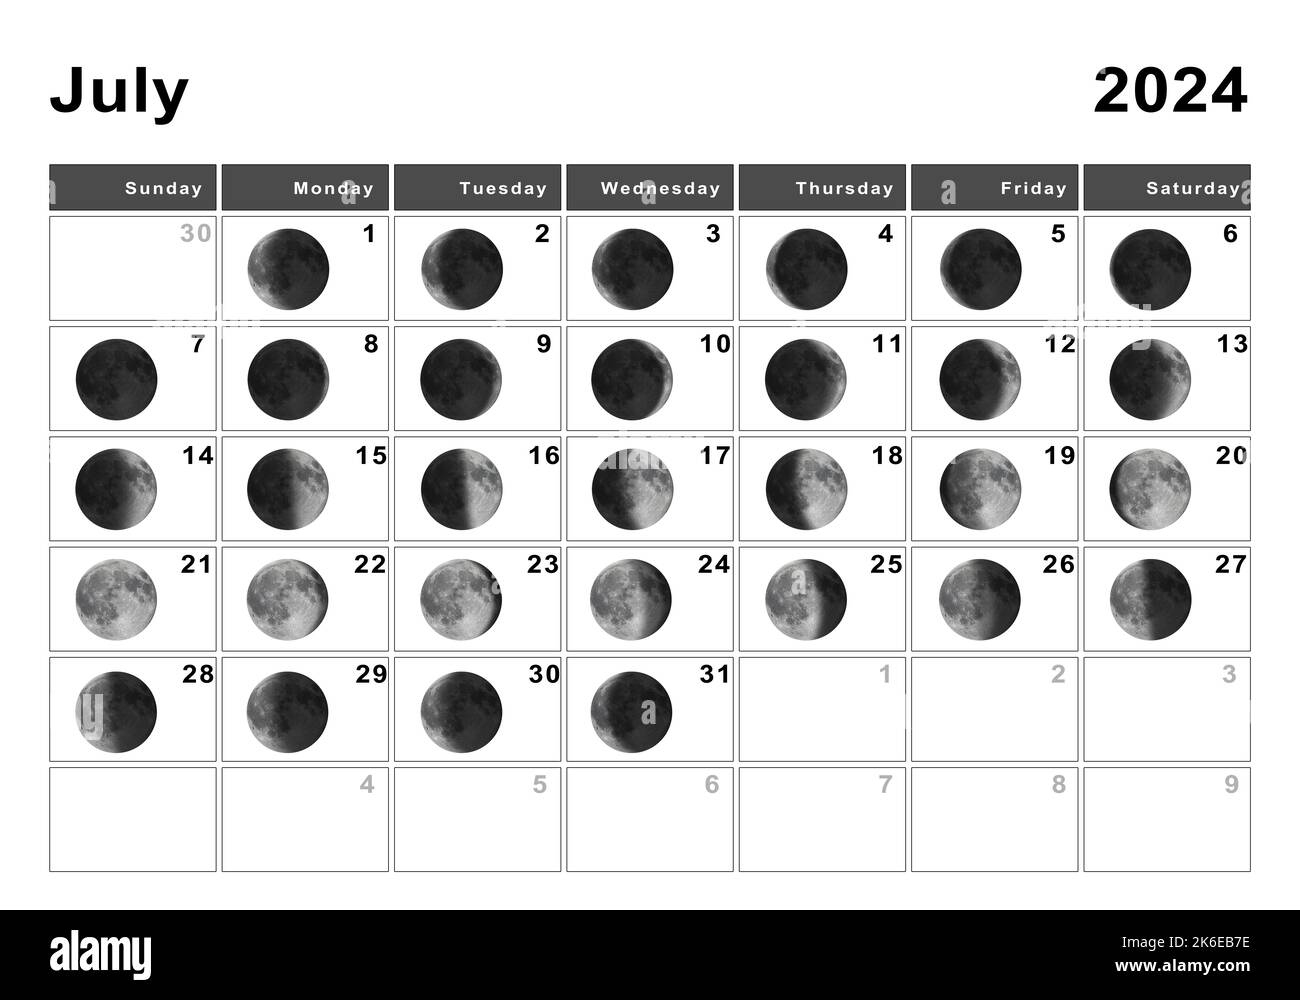 July 2024 Lunar Calendar, Moon Cycles, Moon Phases Stock Photo - Alamy | Moon Calendar For July 2024